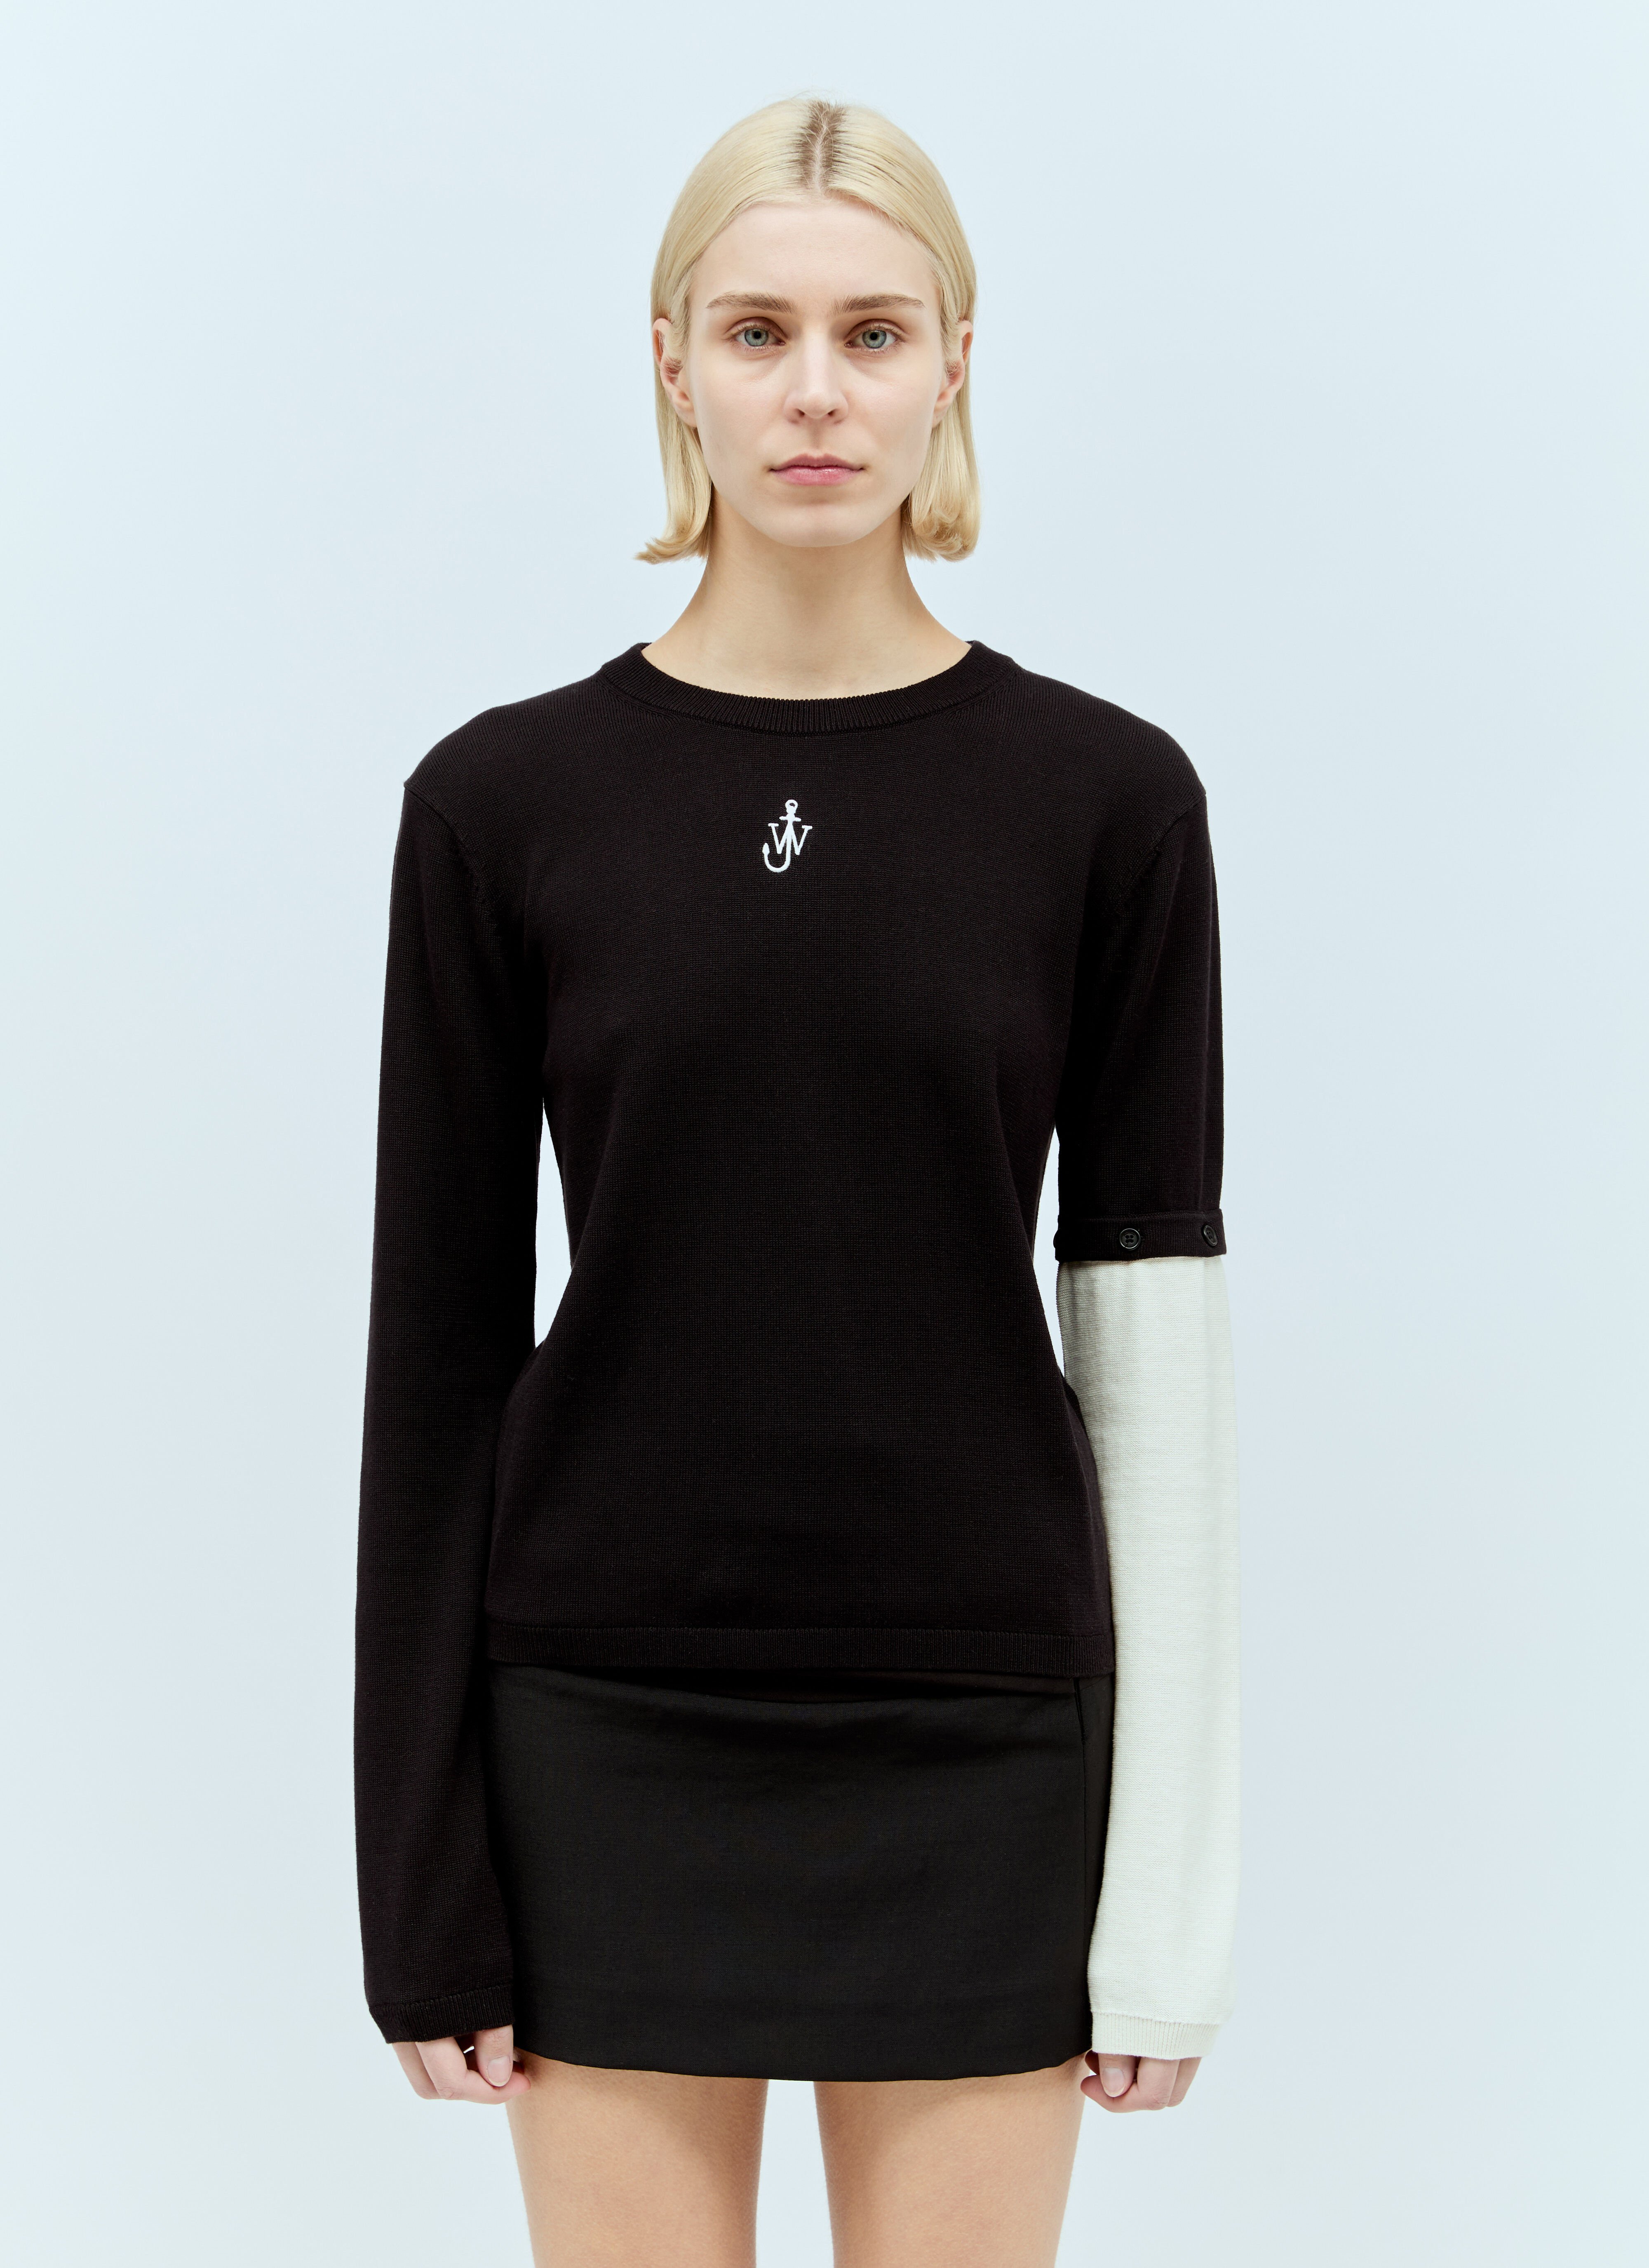 JW Anderson Contrast Sleeve Sweater Black jwa0254005